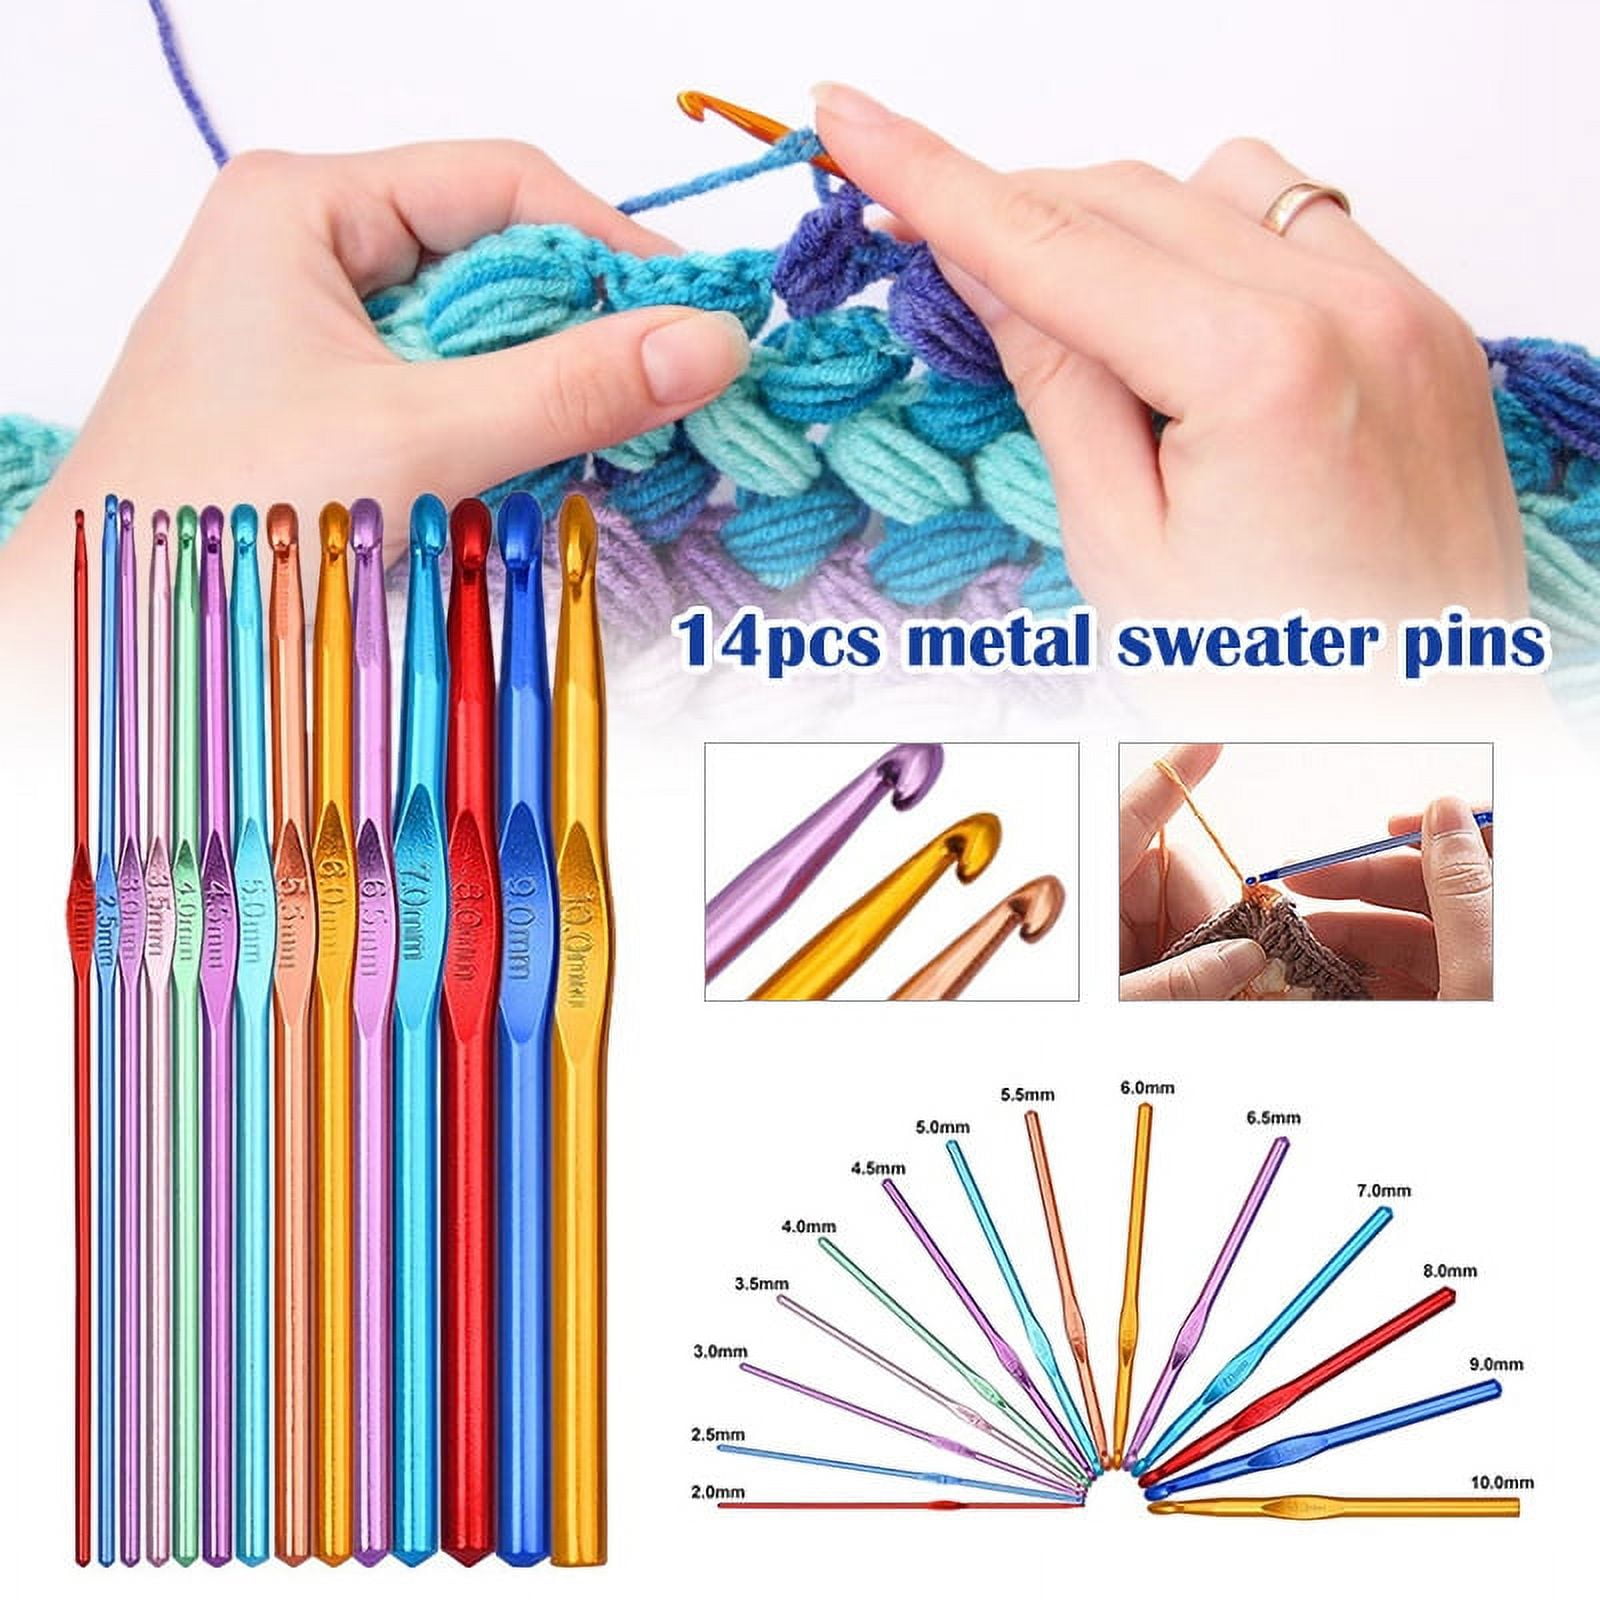 14PCS Aluminum Crochet Hooks Knitting Needles Craft Yarn  2.0mm/2.5mm/3.0mm/3.5mm/4.0mm/4.5mm/5.0mm/5.5mm/6.0mm/6.5mm/7.0mm/8.0mm/9.0mm/10.0mm